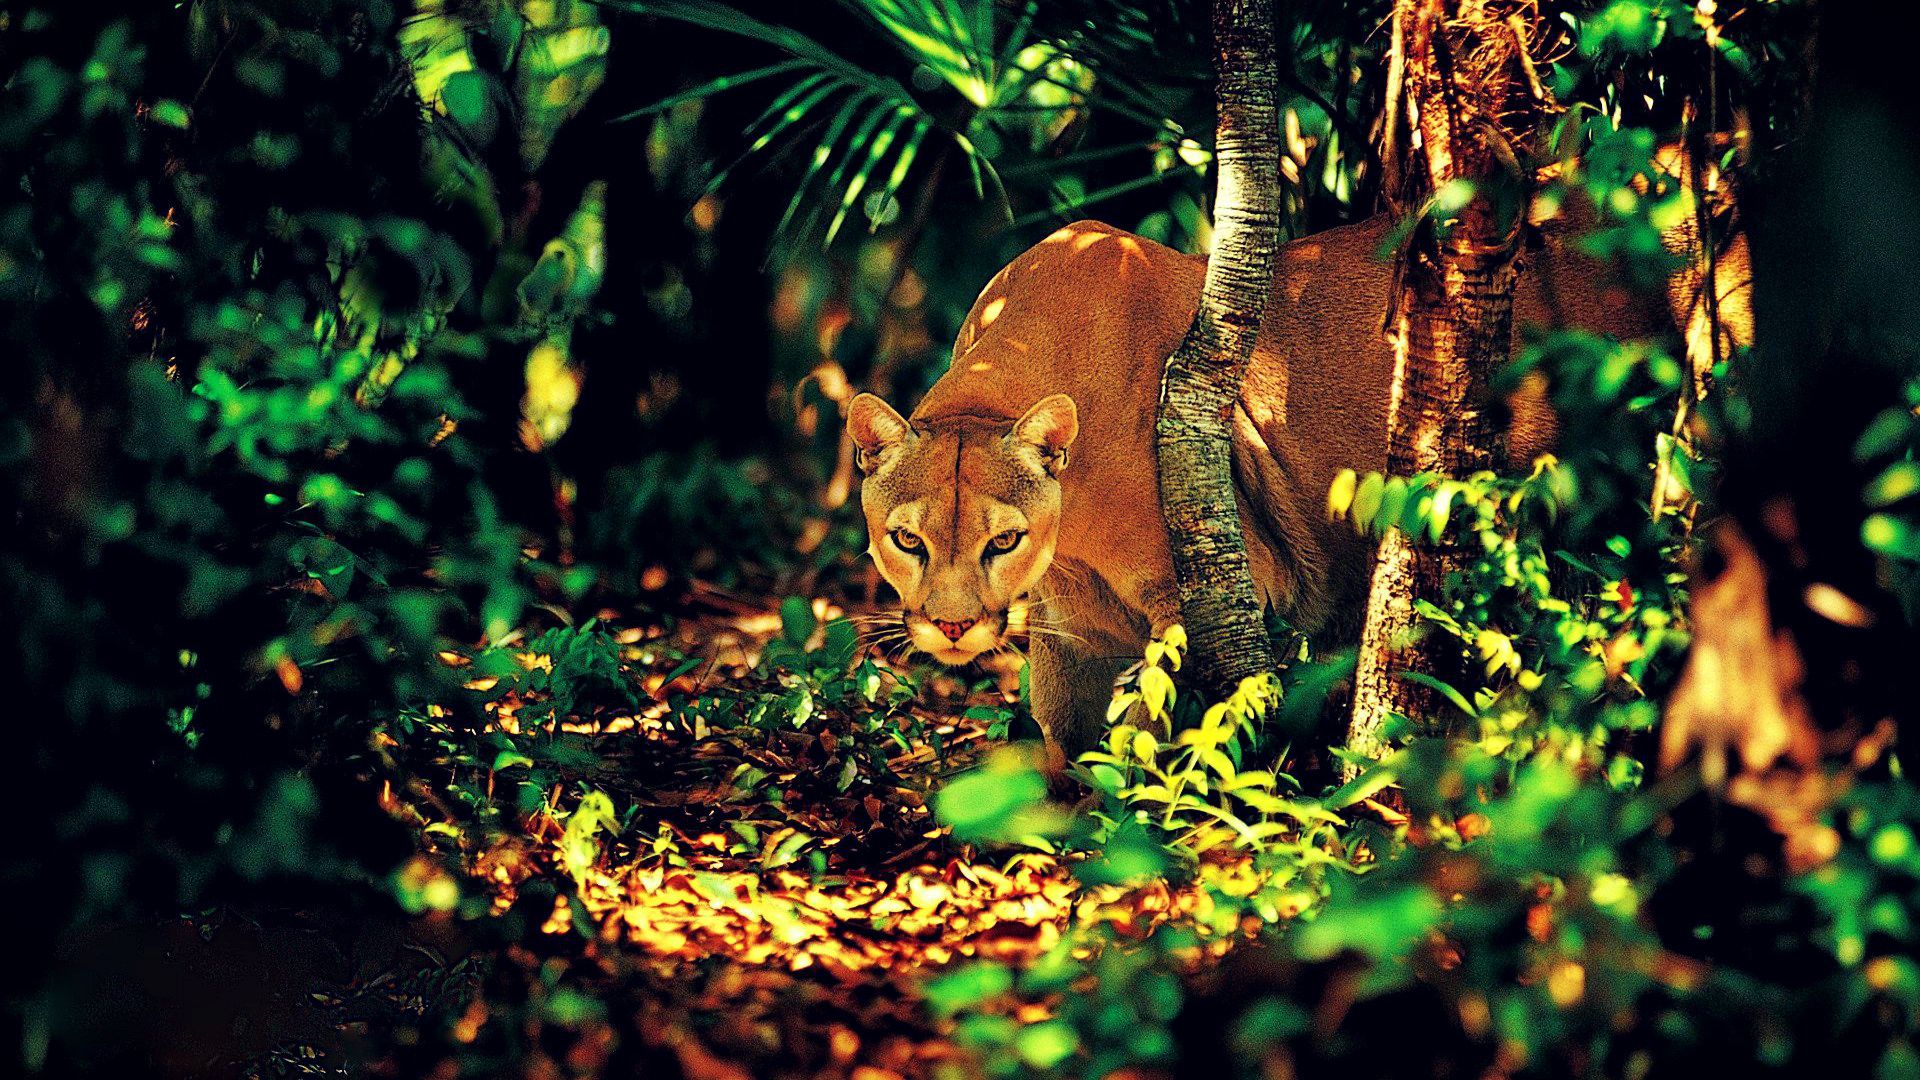 General 1920x1080 pumas jungle big cats animals nature looking at viewer dappled sunlight green mammals vibrant